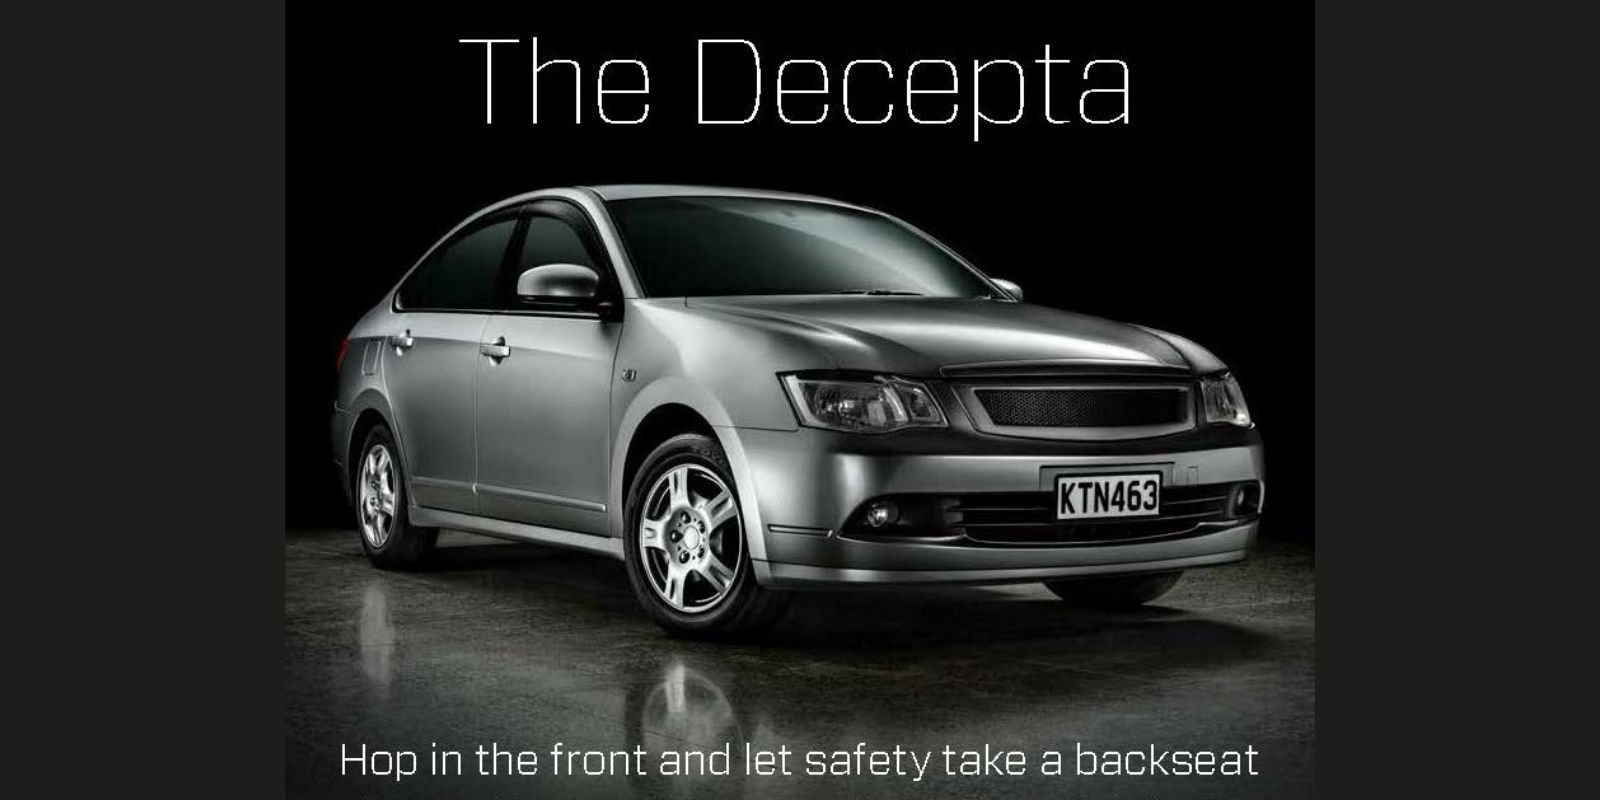 Decepta Car banner image